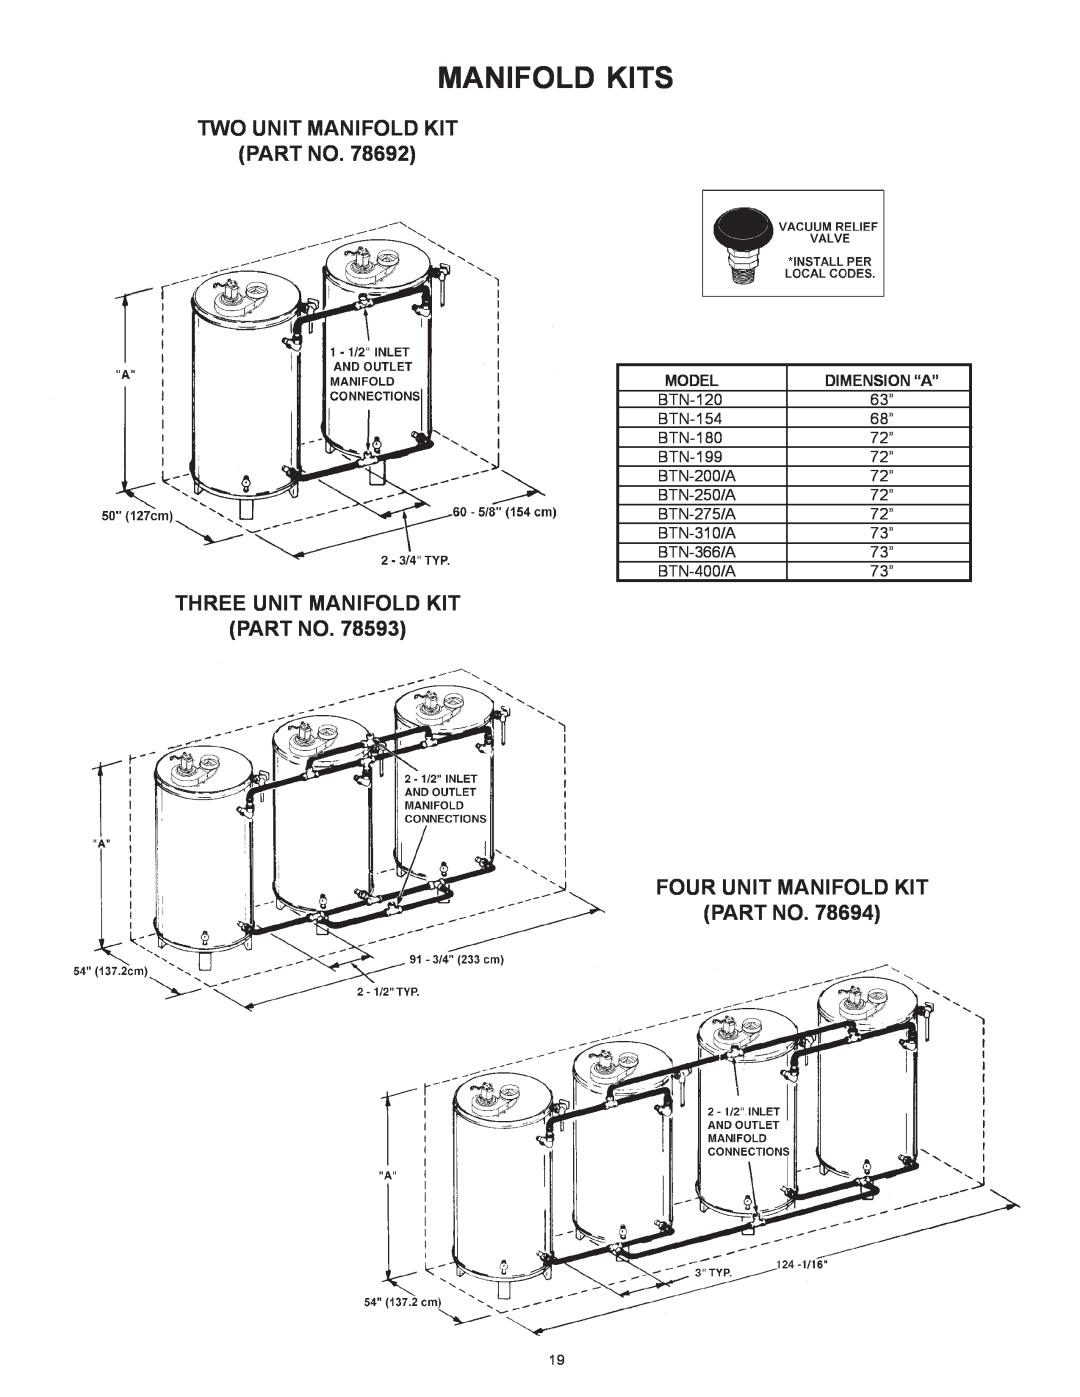 A.O. Smith BTN 120 THRU 400/A Series Manifold Kits, Two Unit Manifold Kit, Three Unit Manifold Kit, Four Unit Manifold Kit 